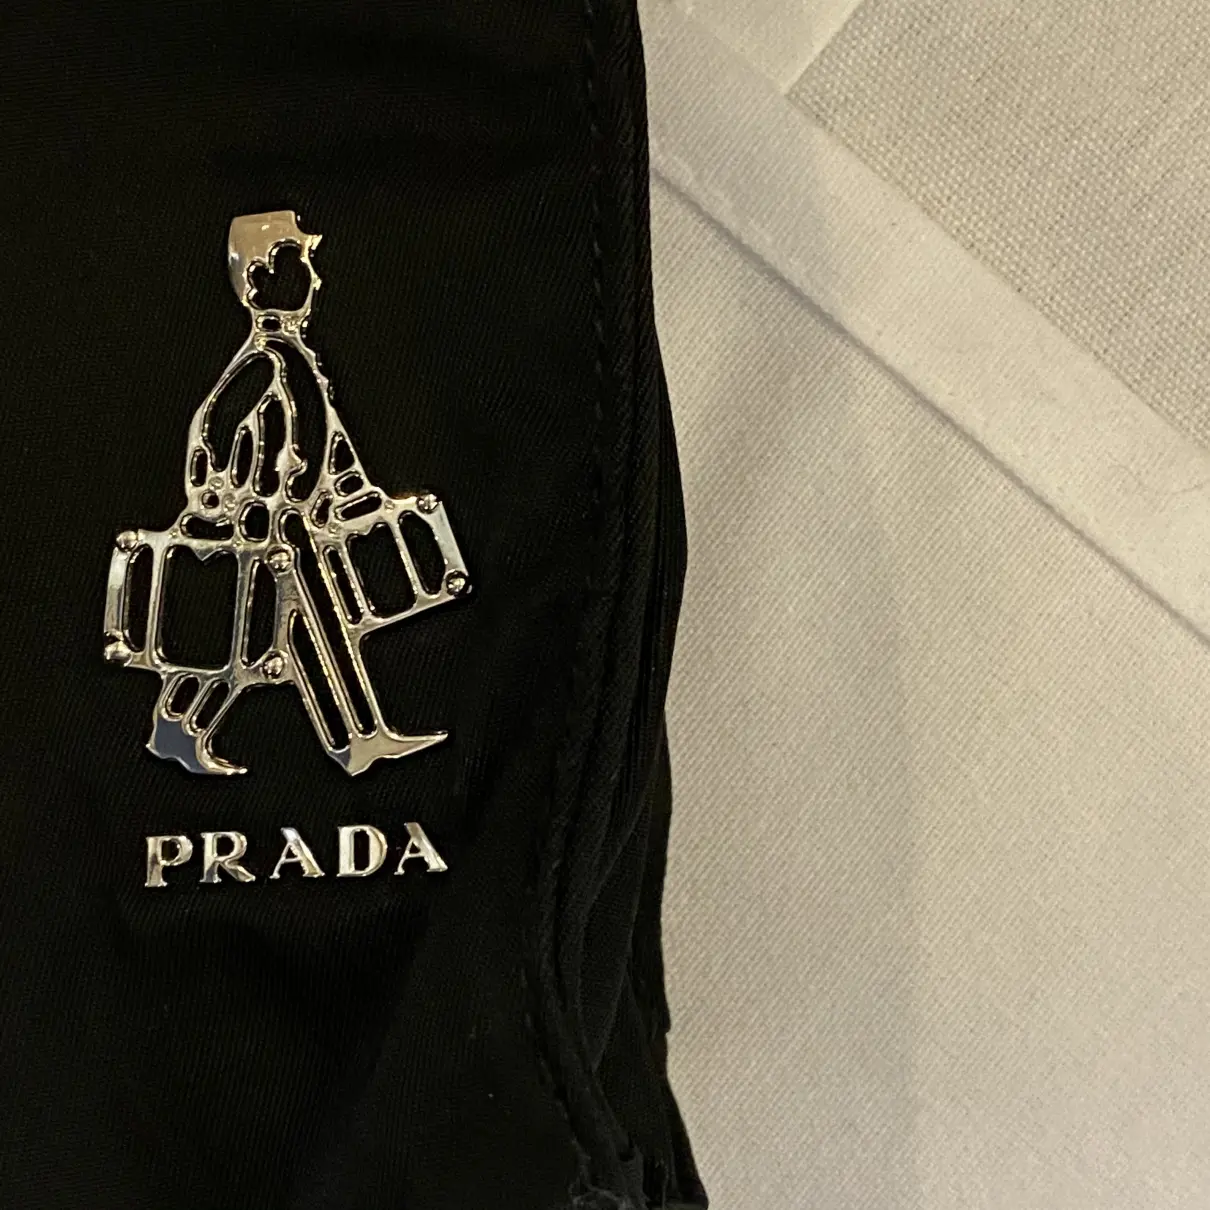 Buy Prada Cloth bag online